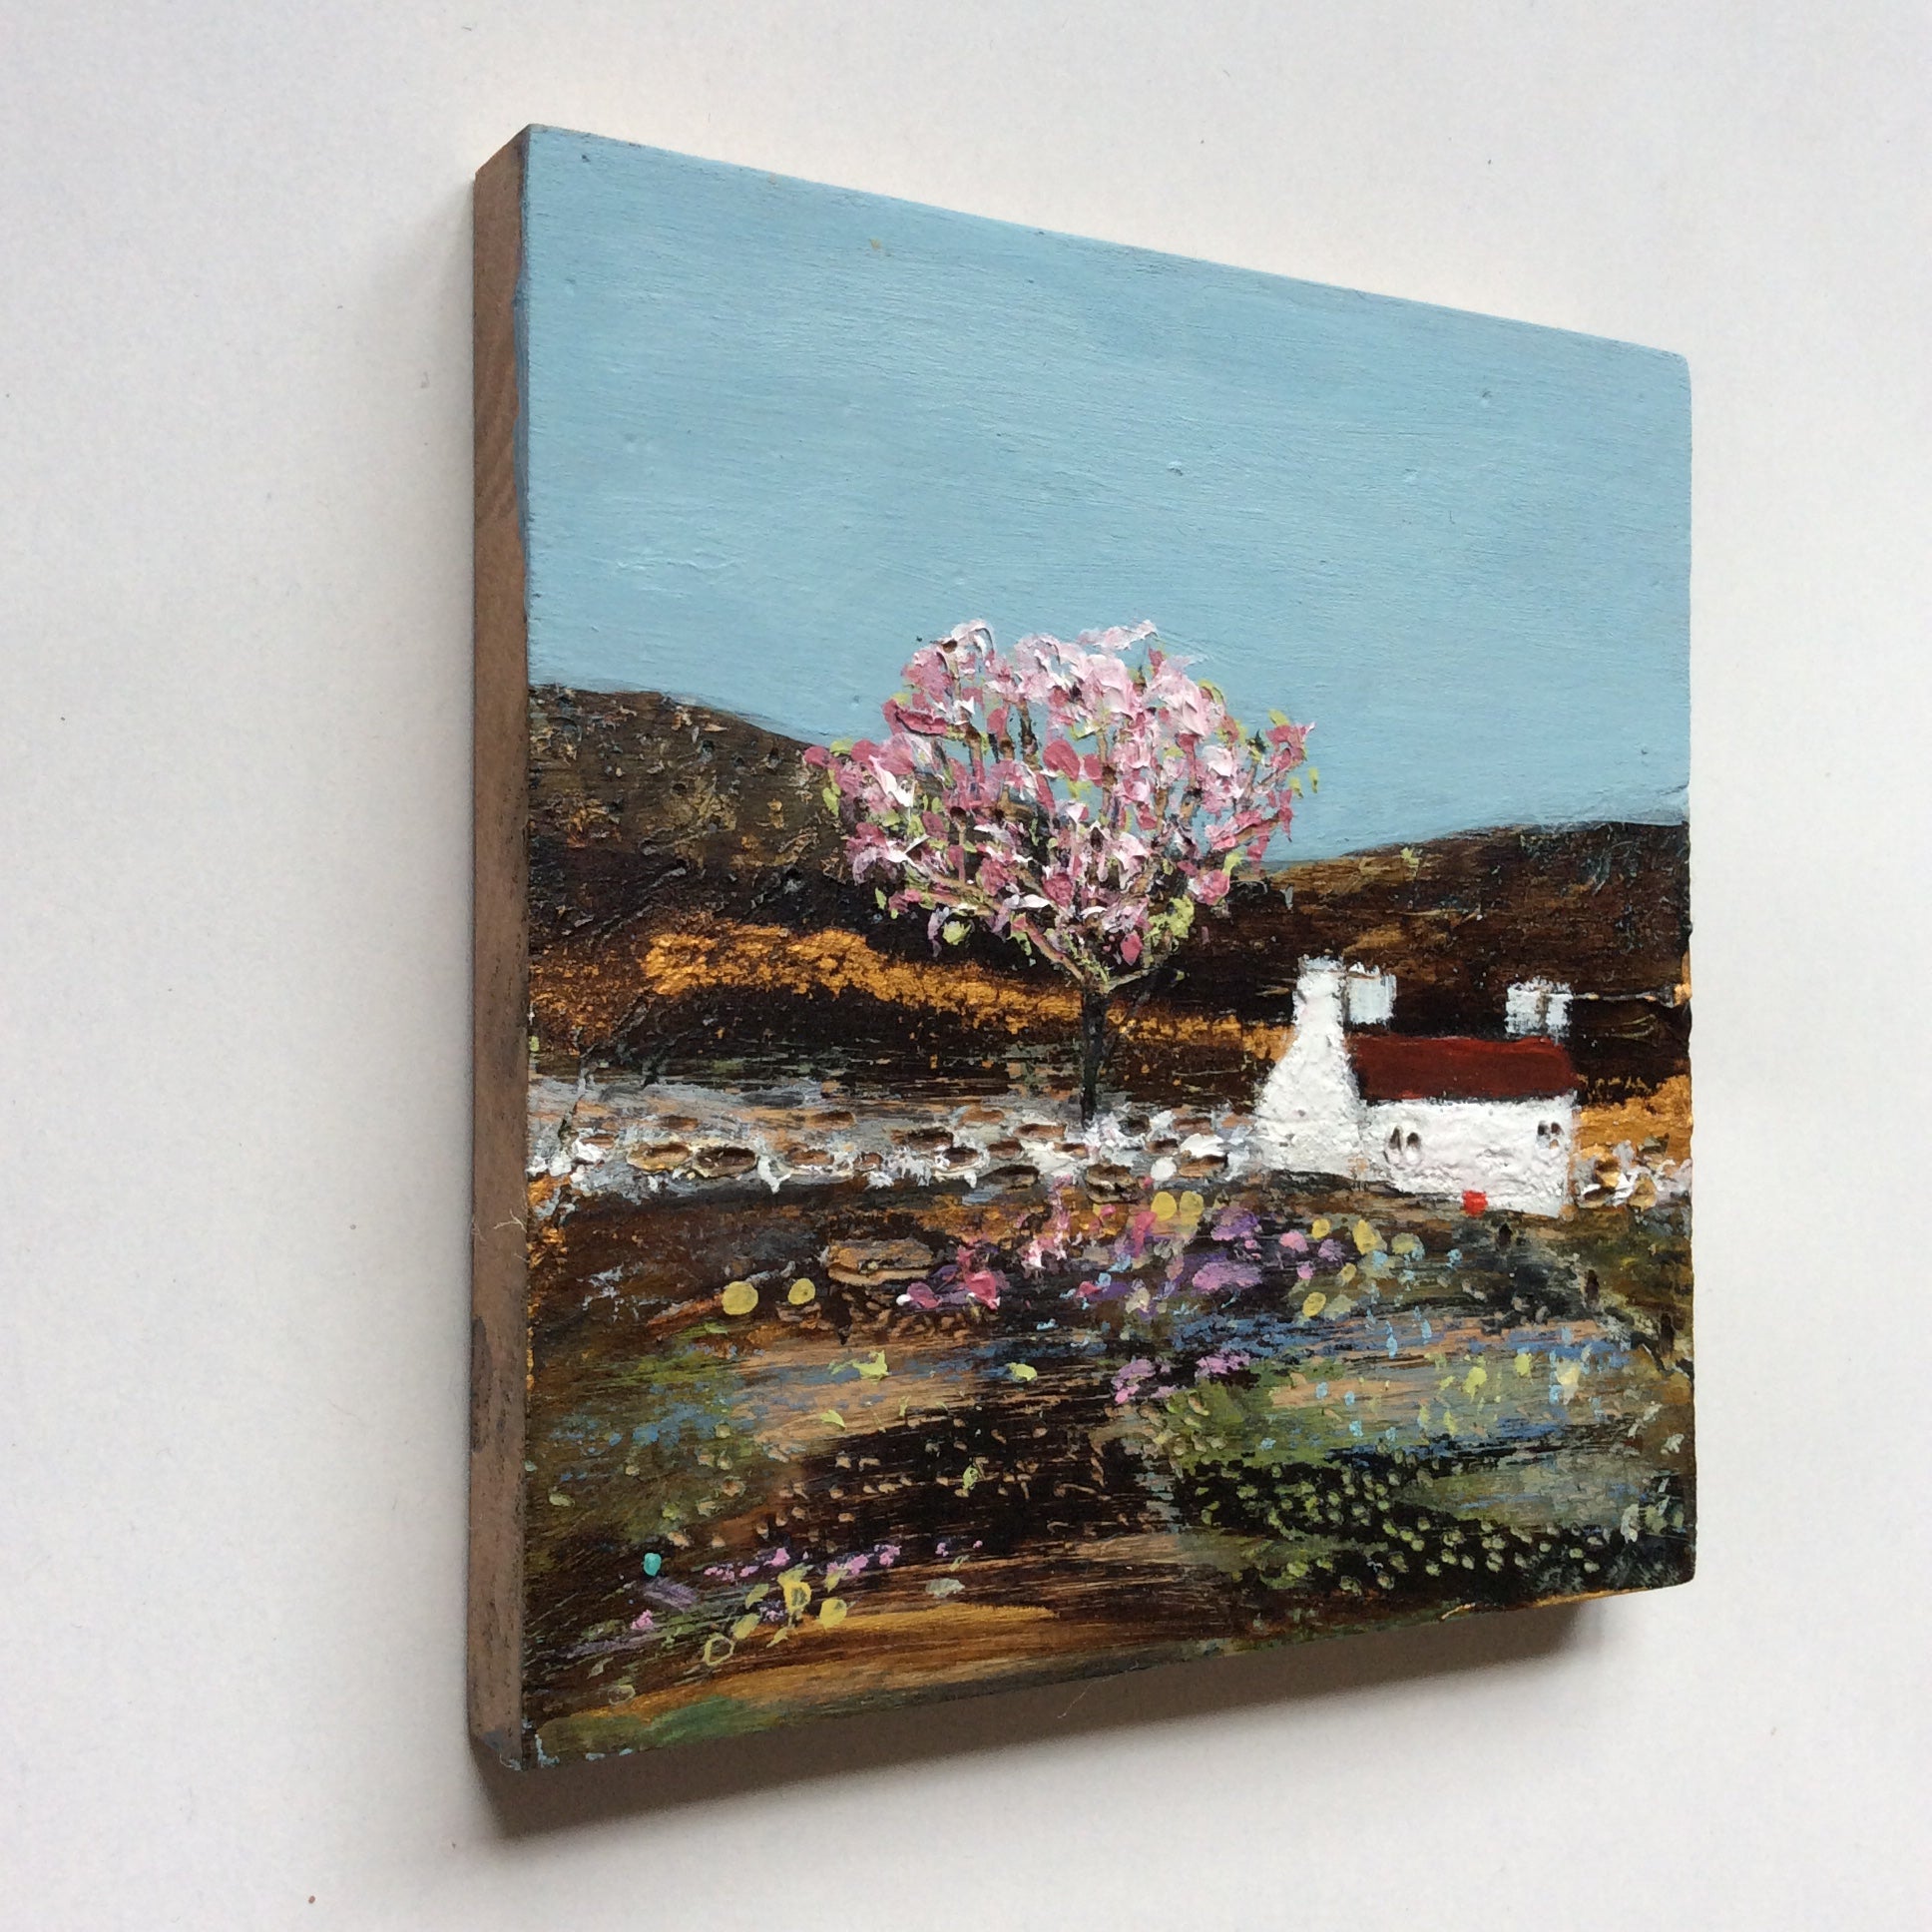 Mixed Media Art on wood By Louise O'Hara - "Cherry Blossom”